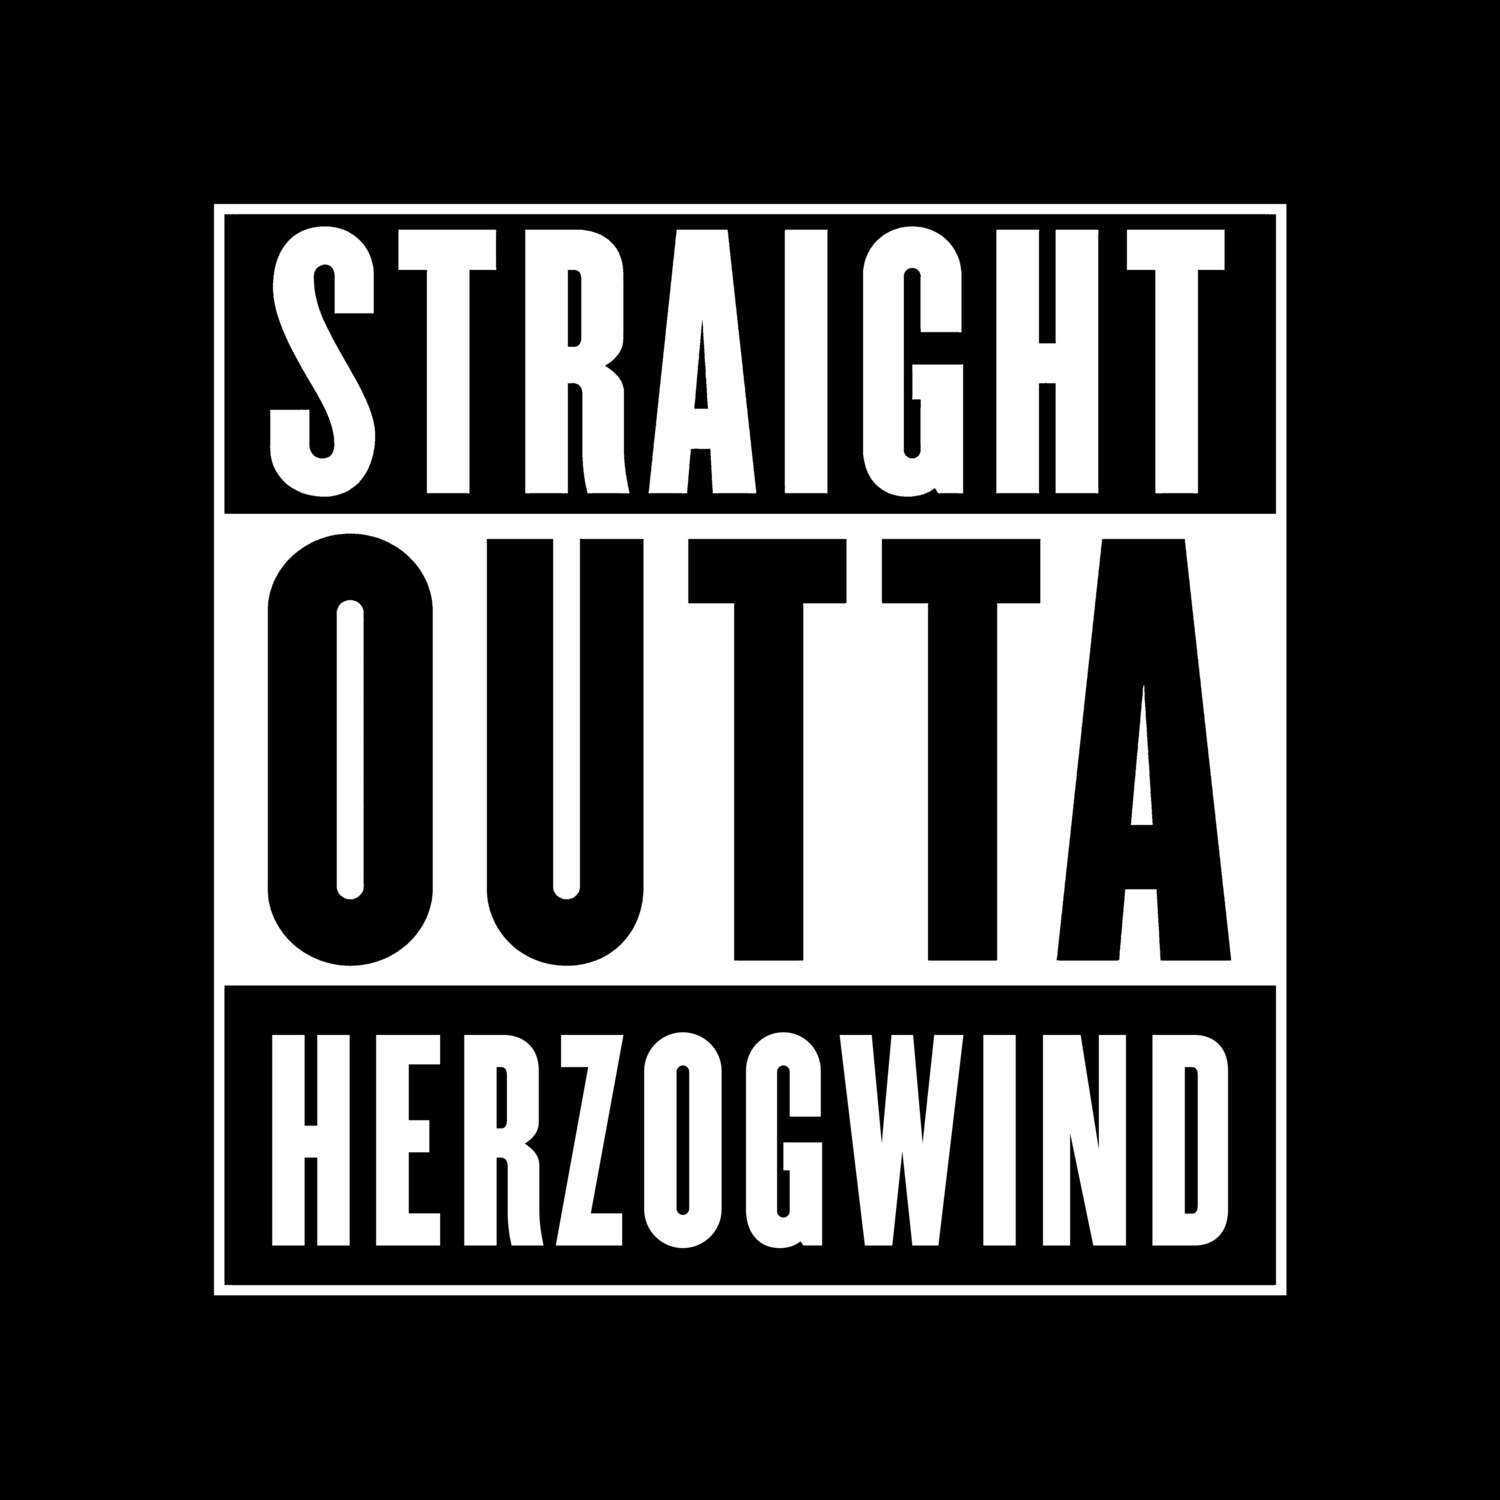 Herzogwind T-Shirt »Straight Outta«